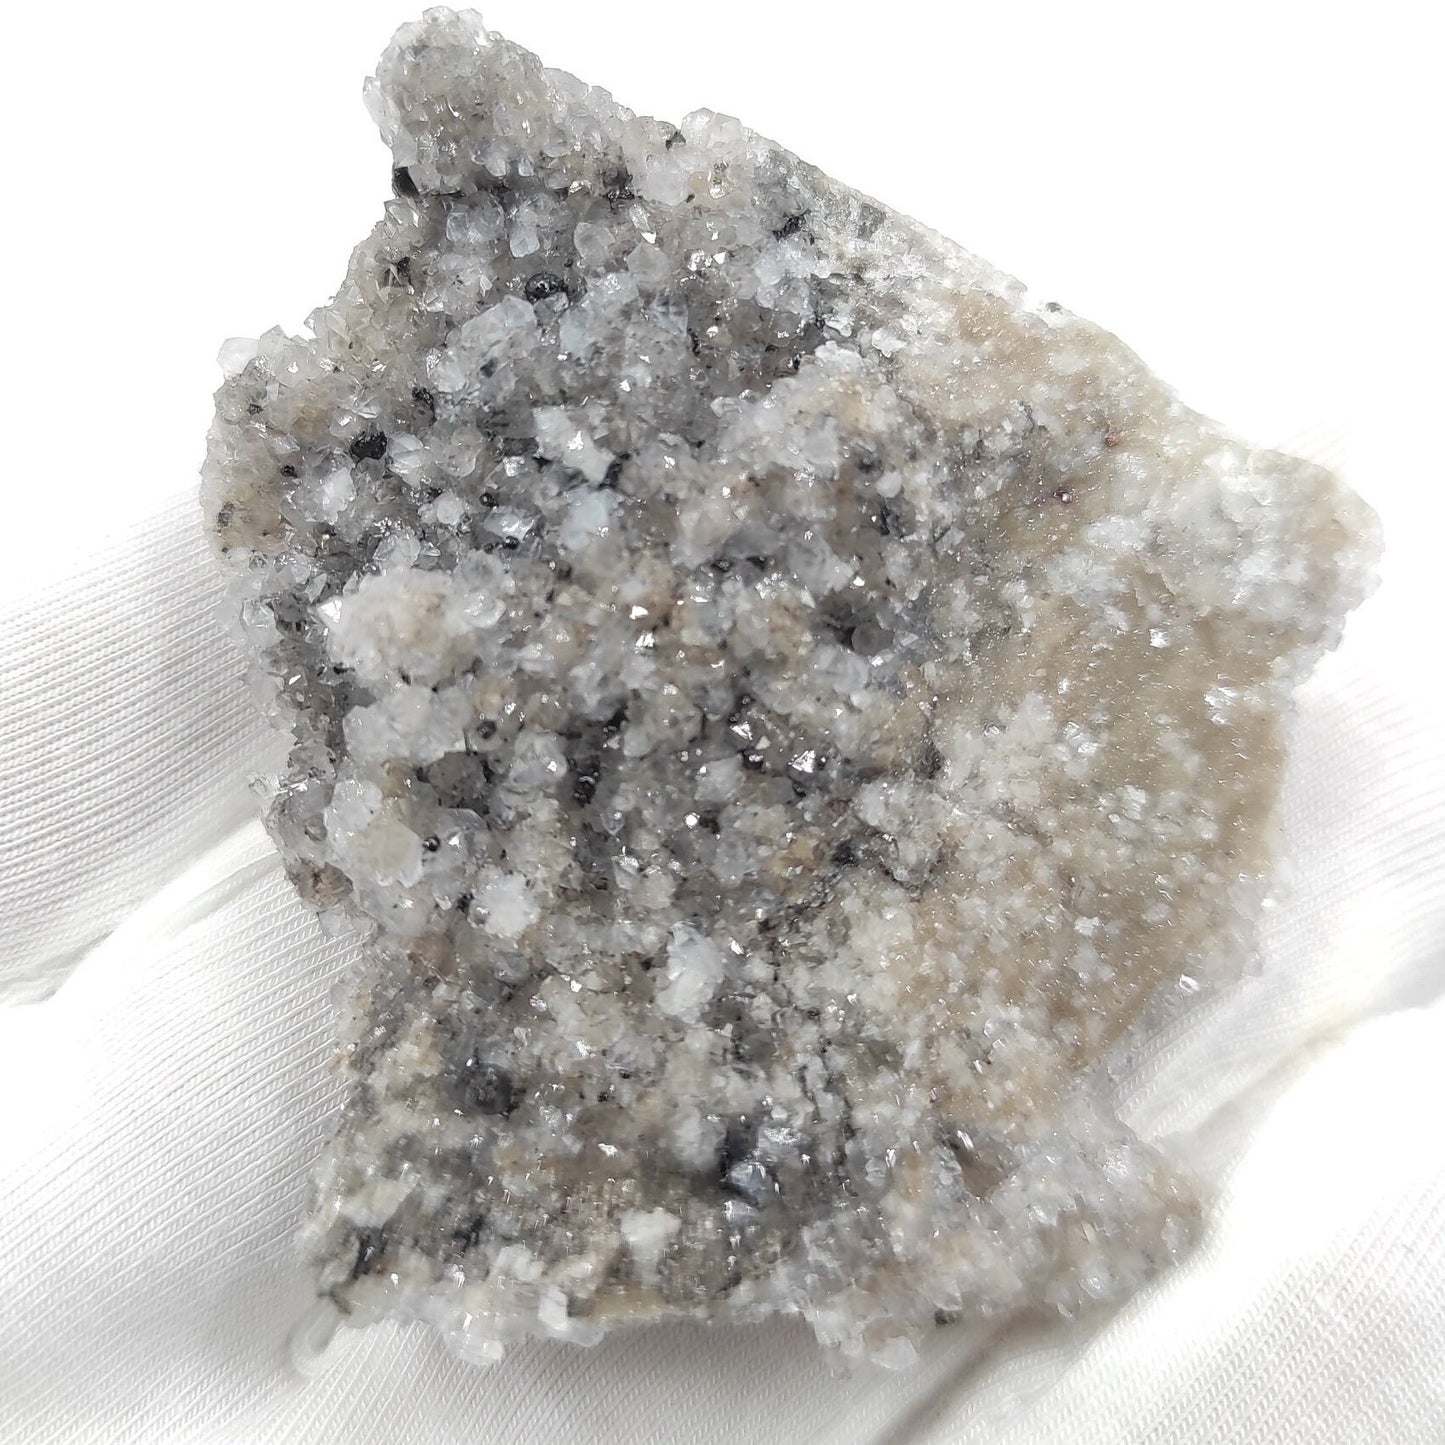 36g Elmwood Calcite and Sphalerite on Druzy Quartz - Elmwood Mine, Tennessee, United States - Mineral Specimen - Yellow Calcite Specimen